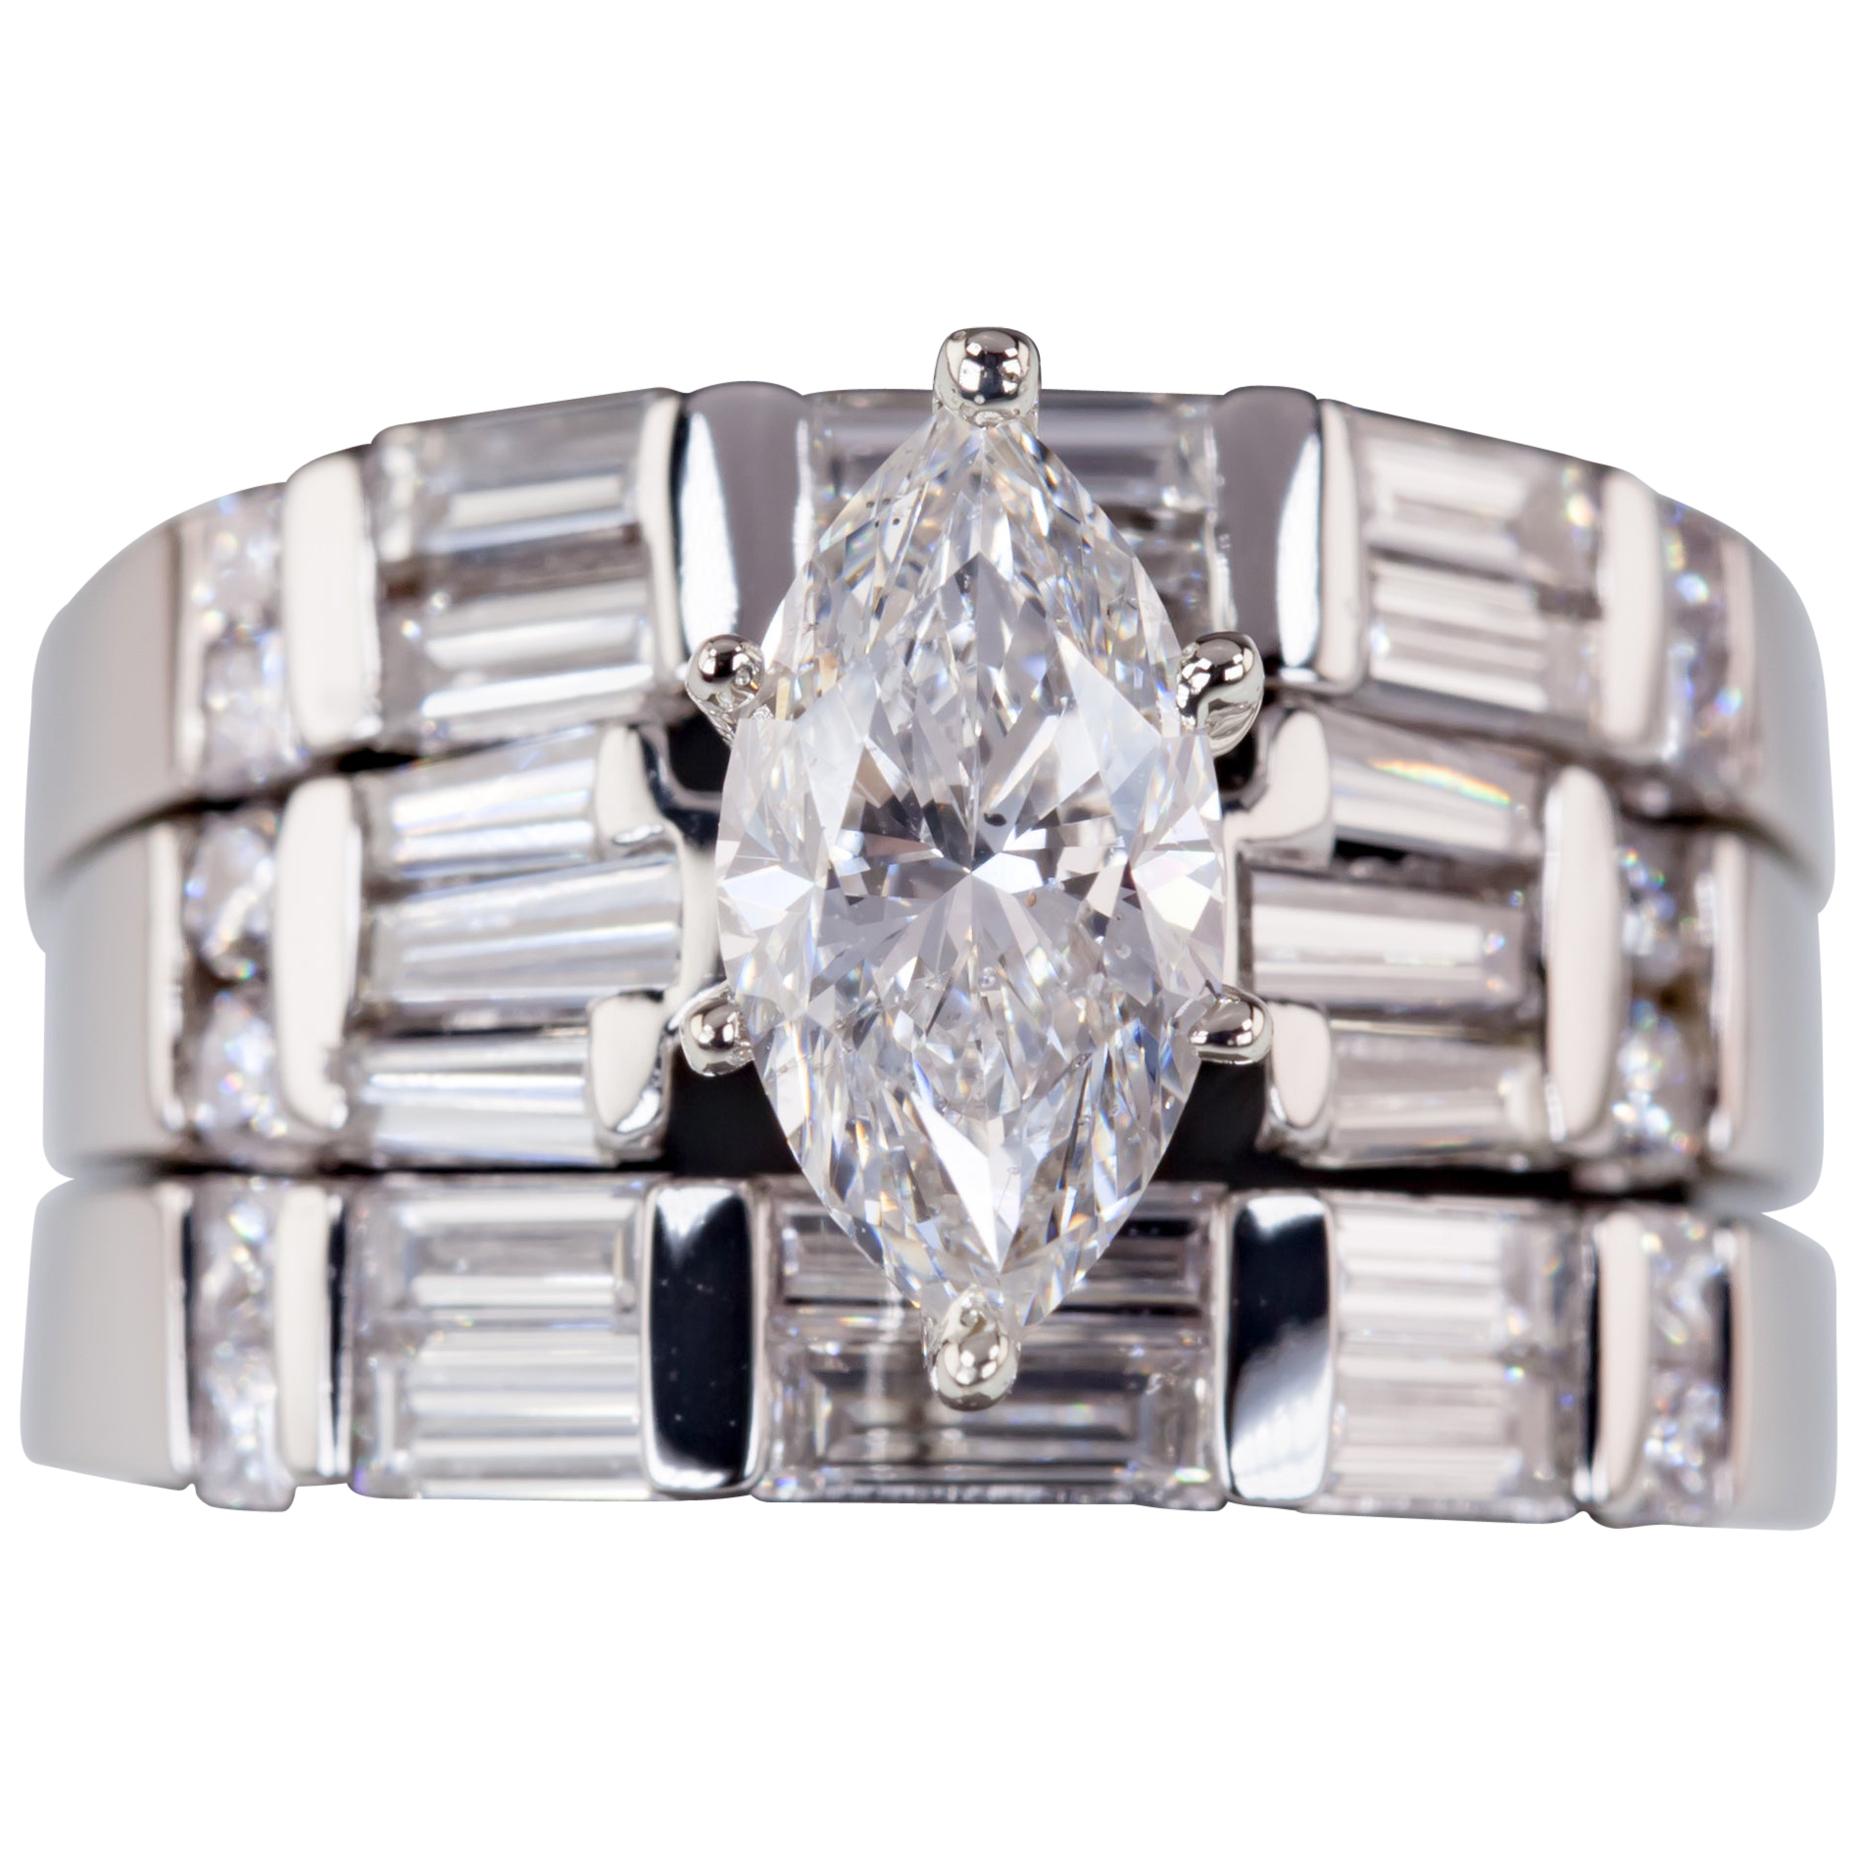 1.07 Carat Marquise Diamond Wedding Set in Platinum Three Rings